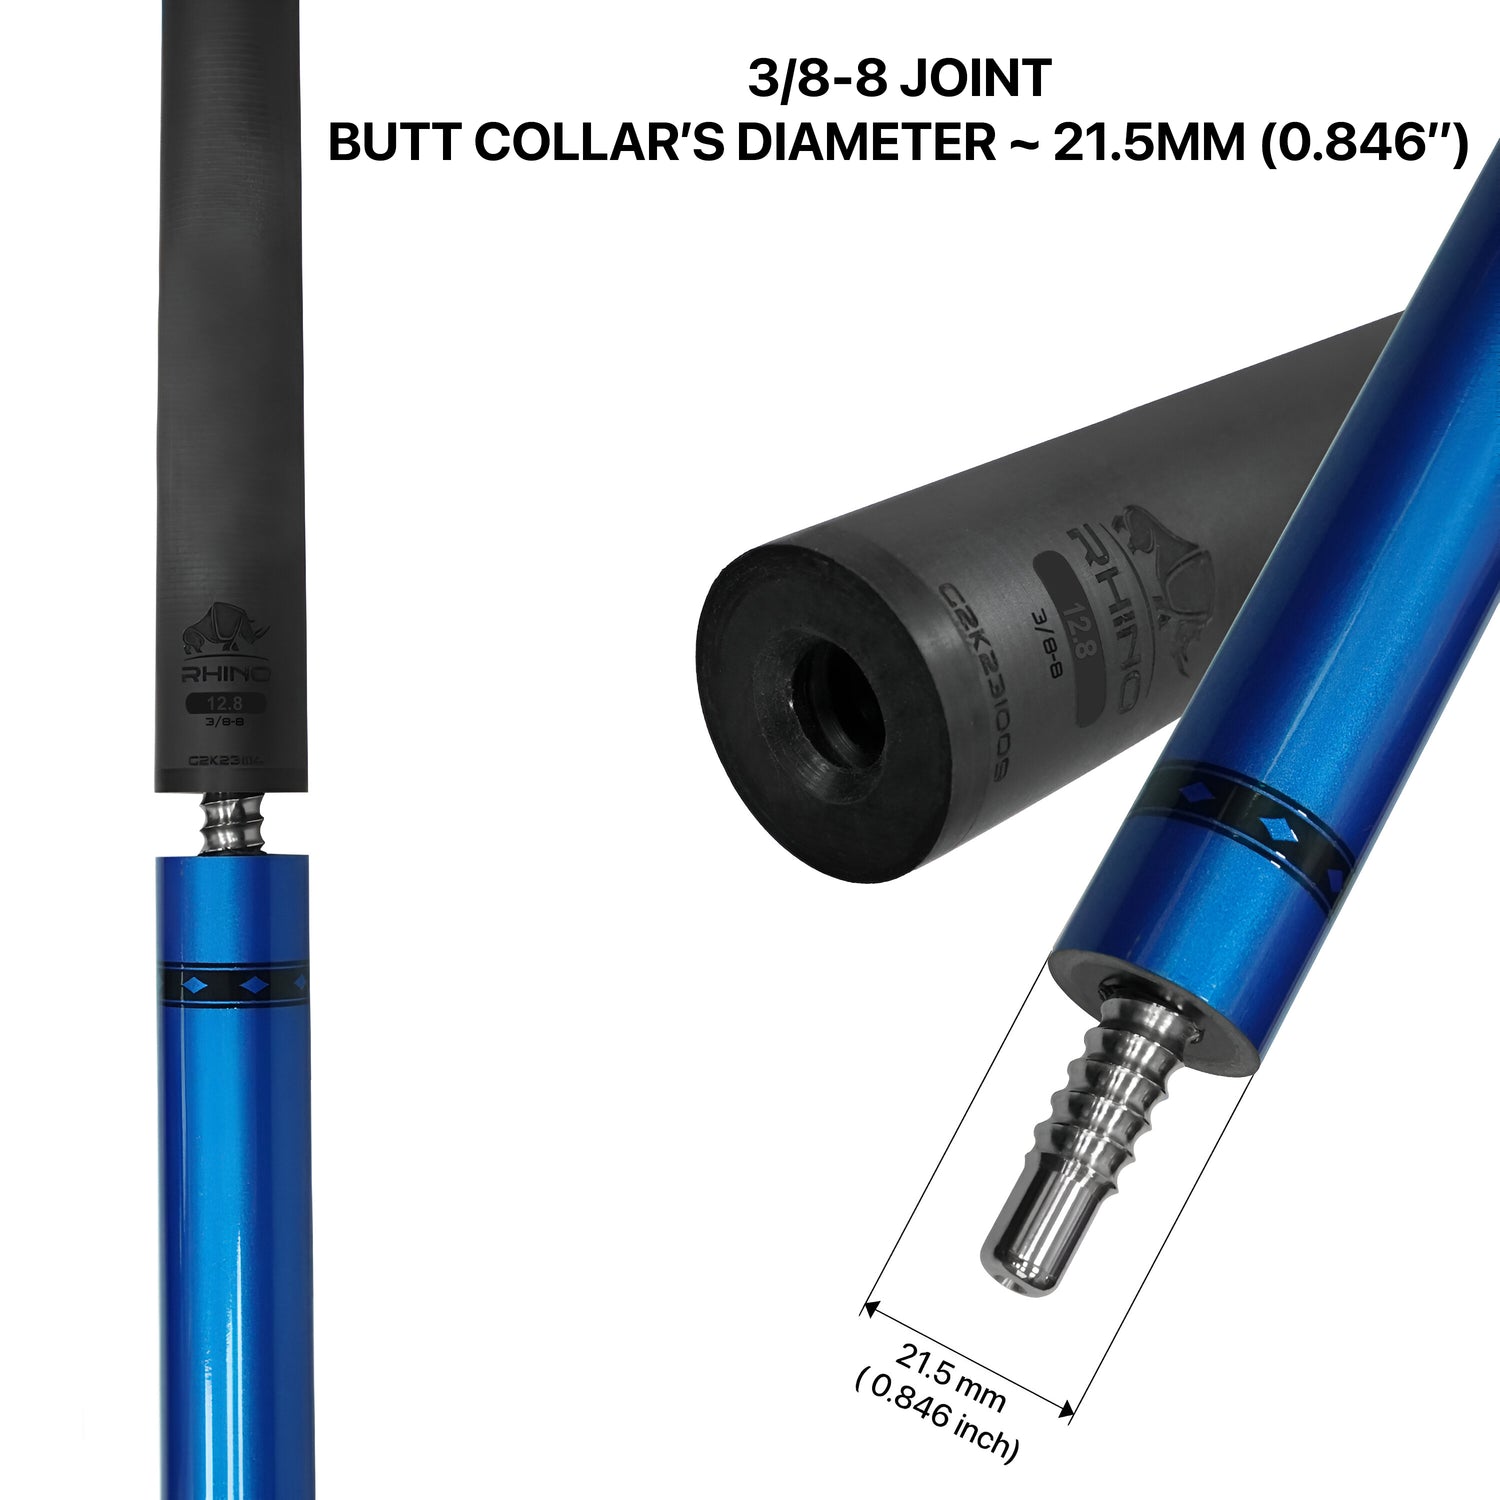 Nebula Pool Cue - Blue (3/8-8 Joint) - 12.8 mm Tip Diameter